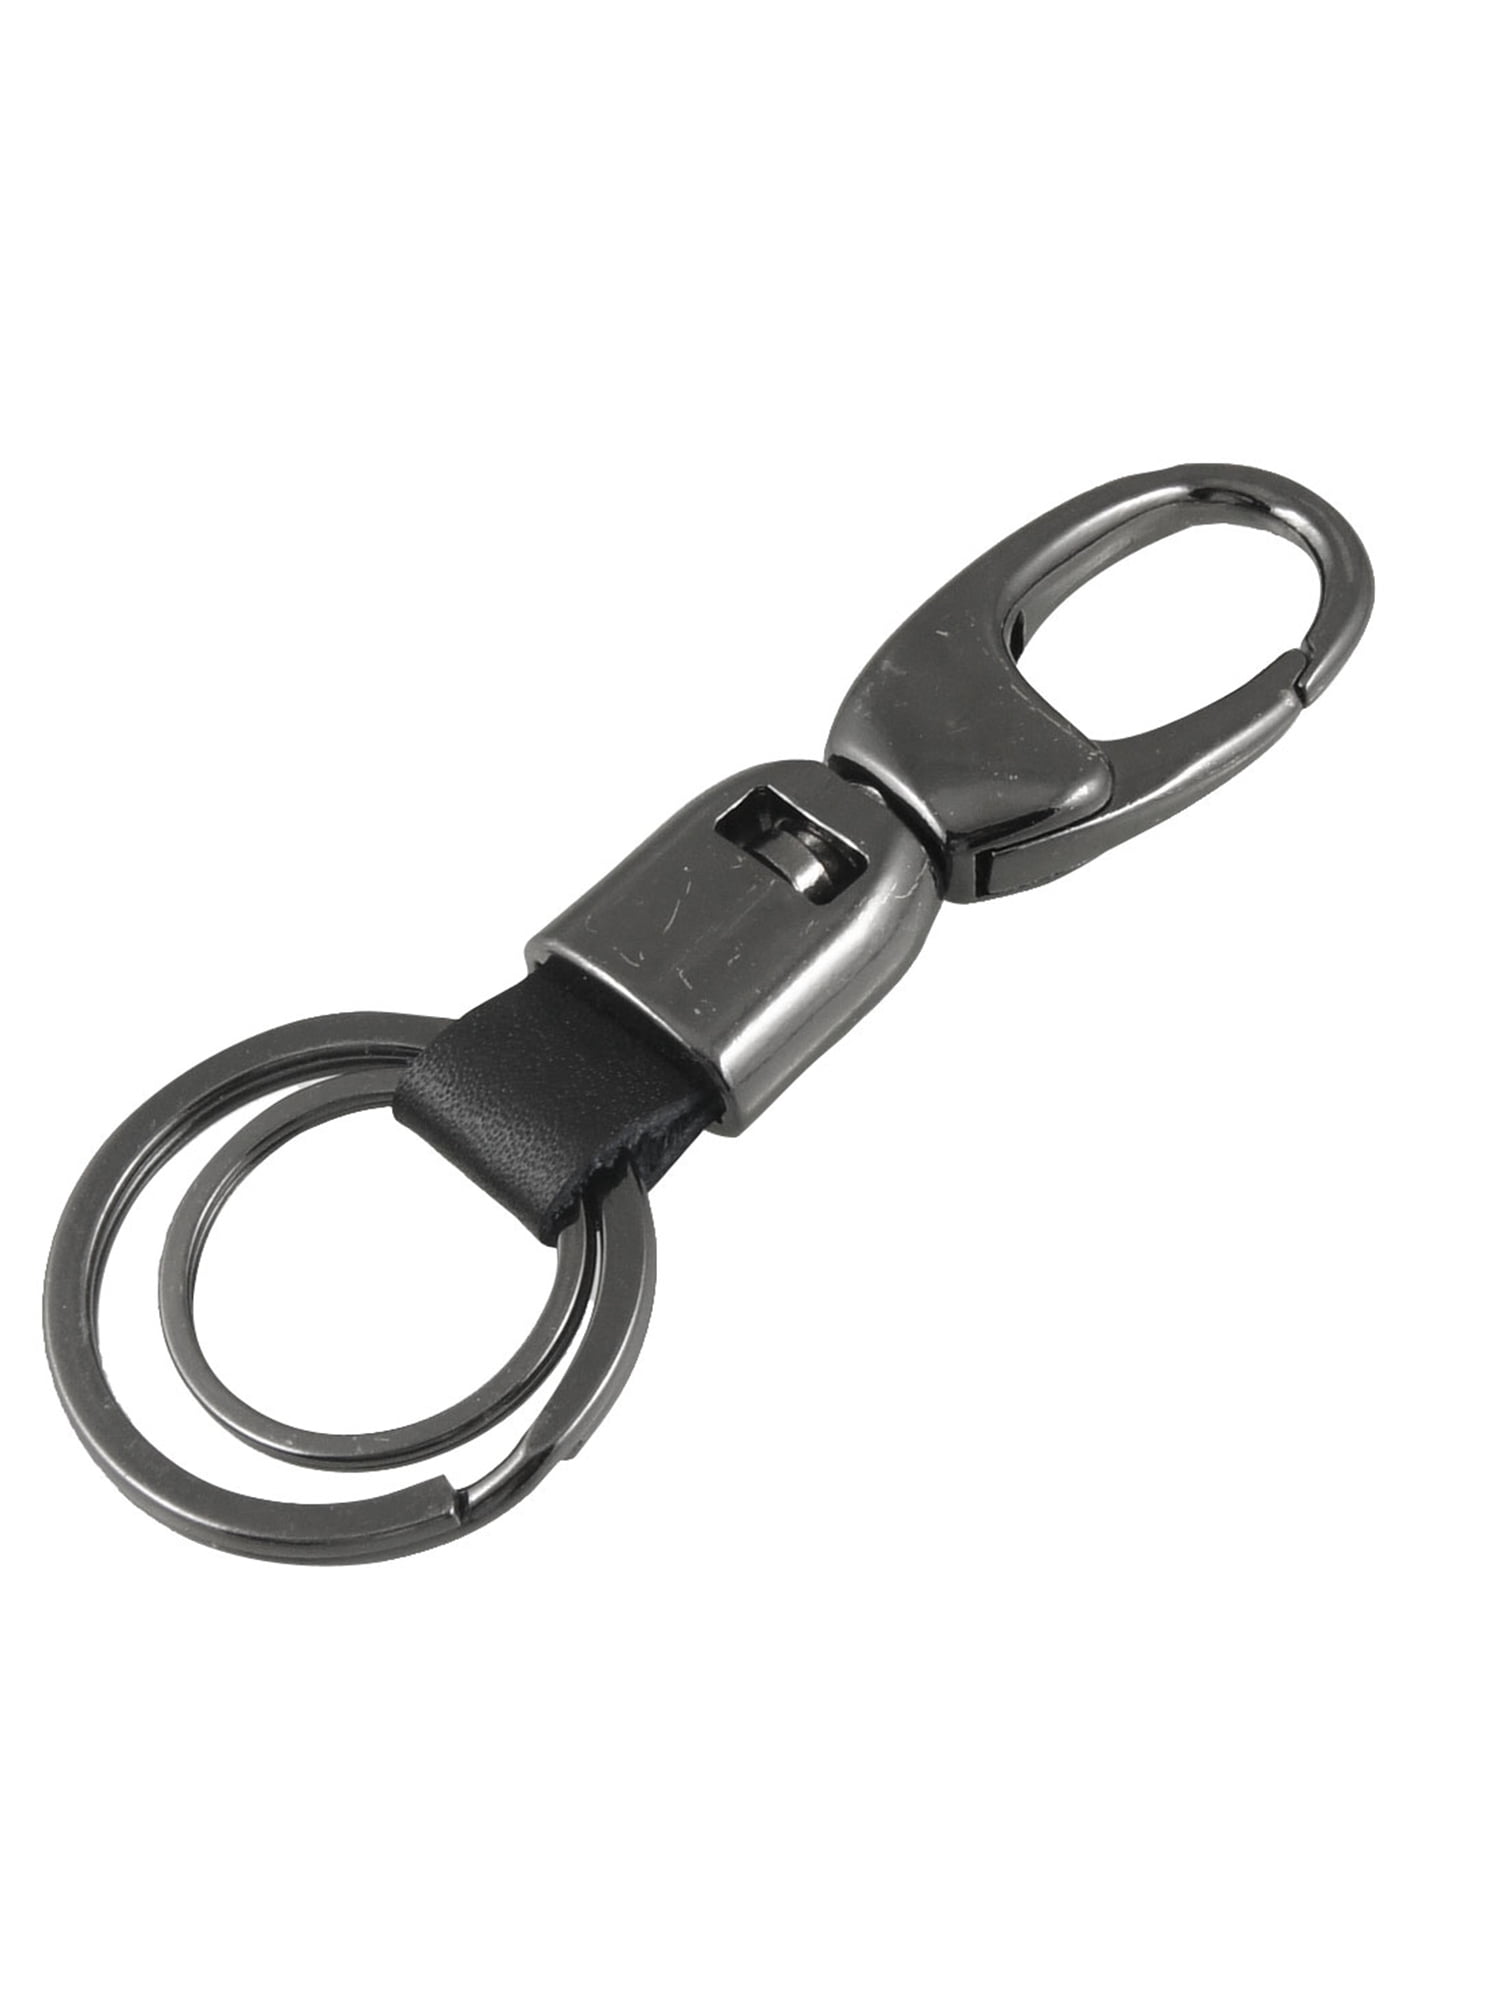 5 Pcs Buckle Key Chain D-Ring Snap Plastic Clip Hook Outdoor Carabiner C LGJ